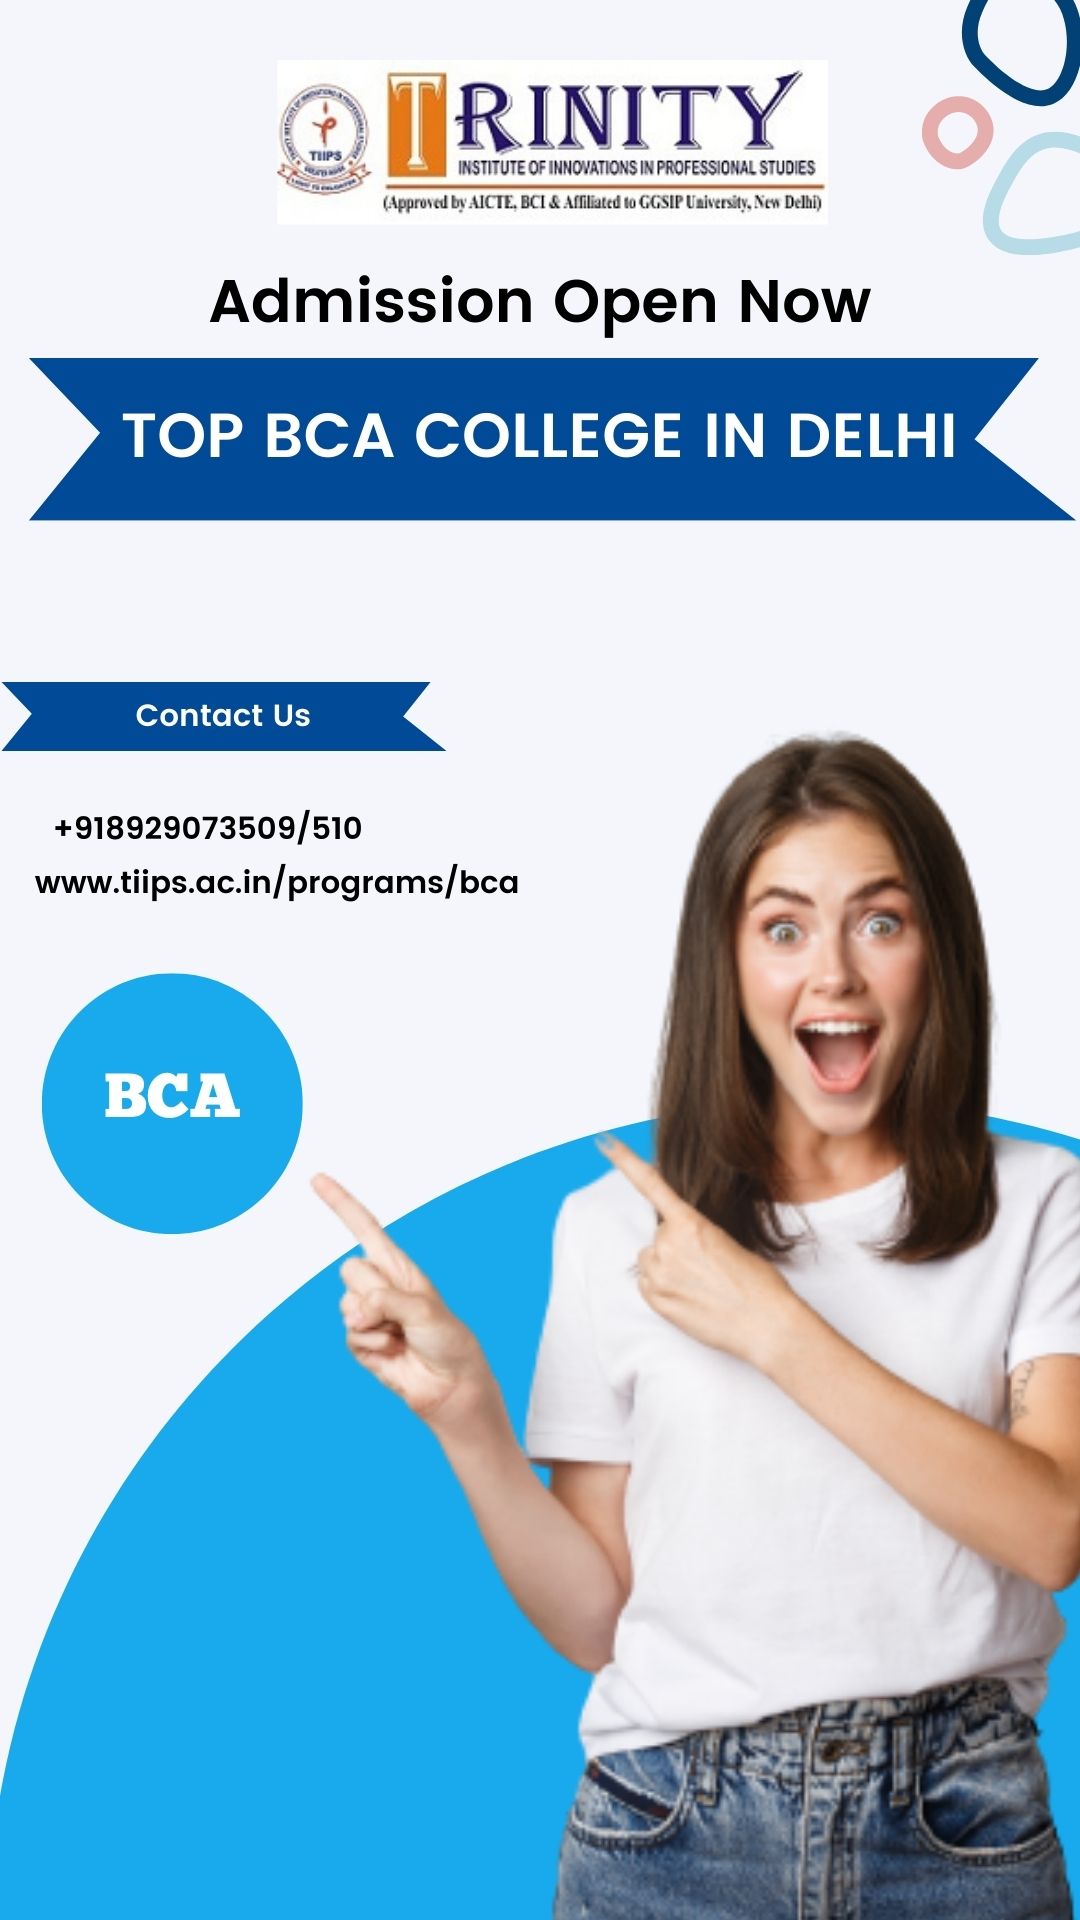 Top BCA College in Delhi for Students